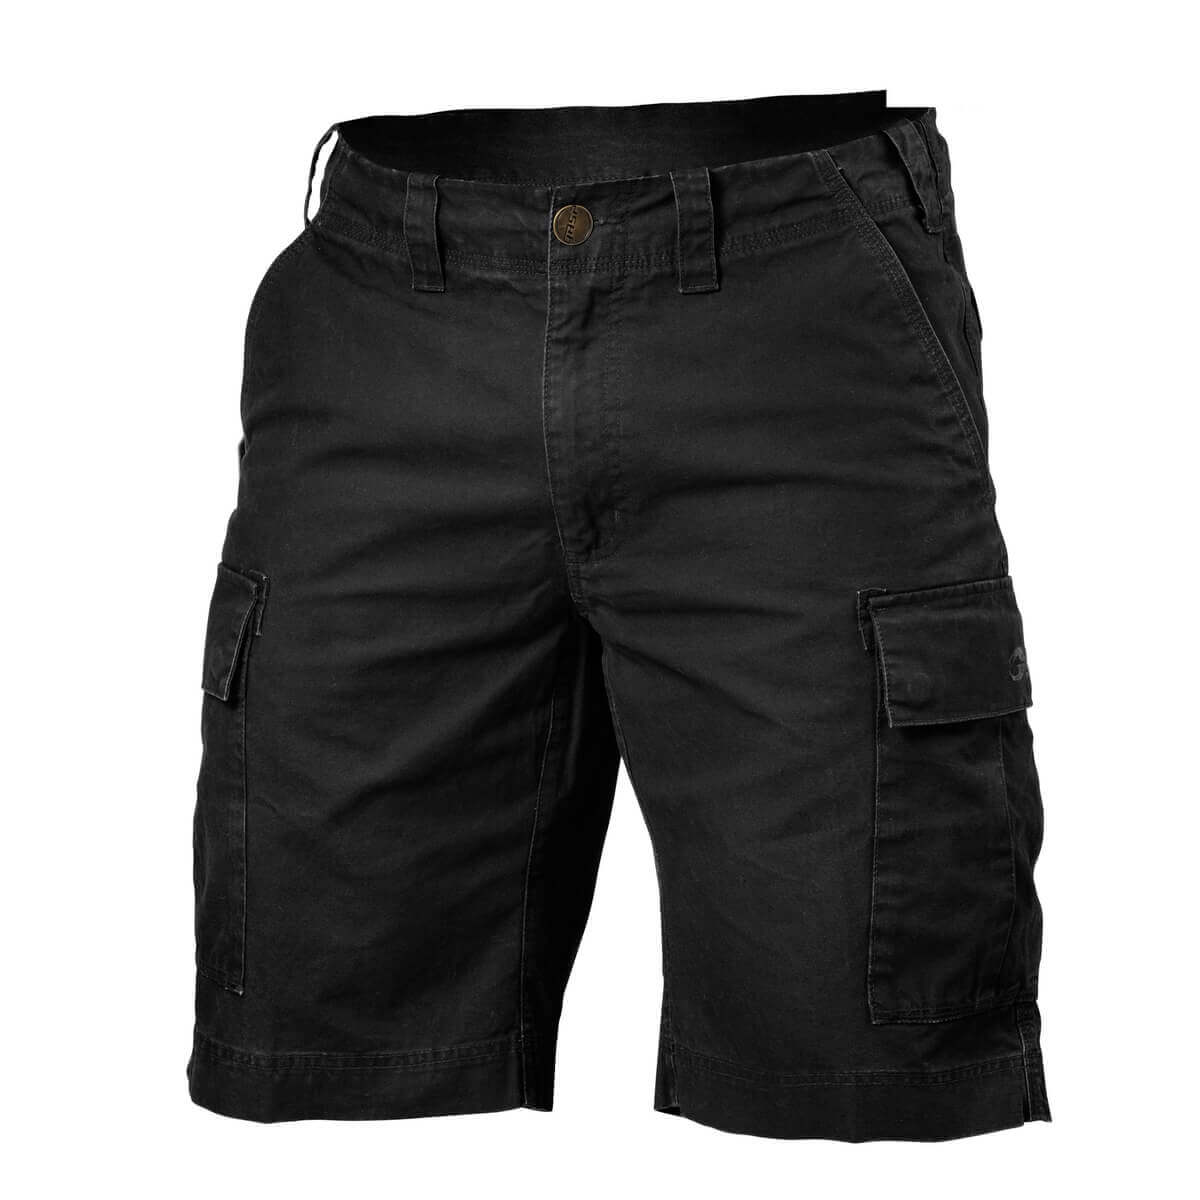 Sjekke Rough Cargo Shorts, wash black, GASP hos SportGymButikken.no